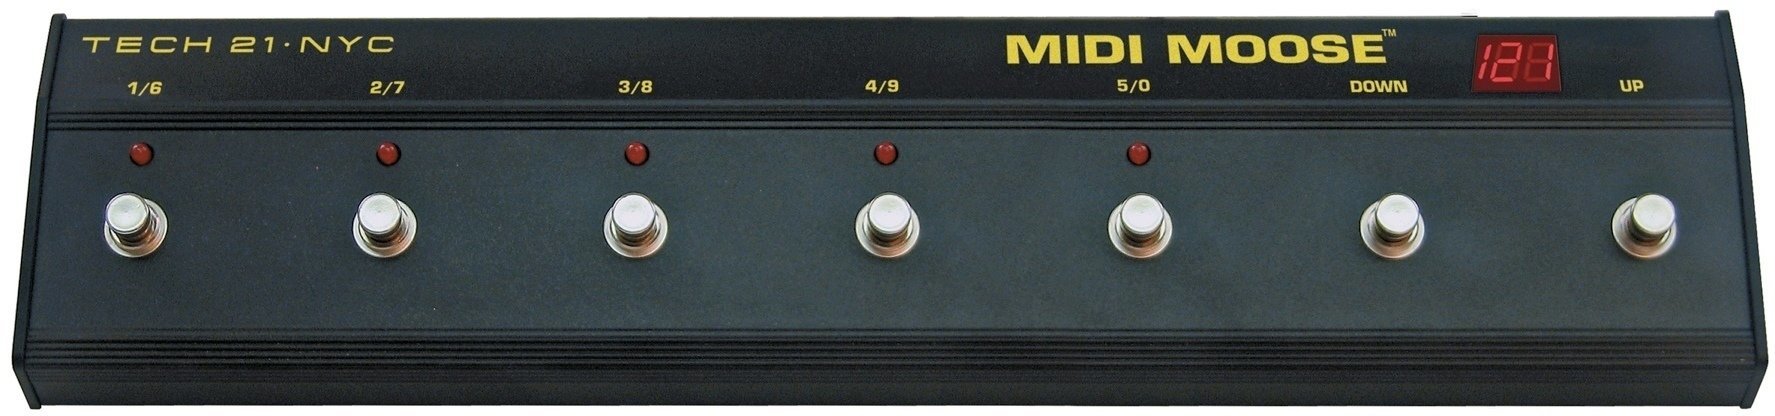 Kontroler MIDI, Sterownik MIDI Tech 21 MIDI Moose